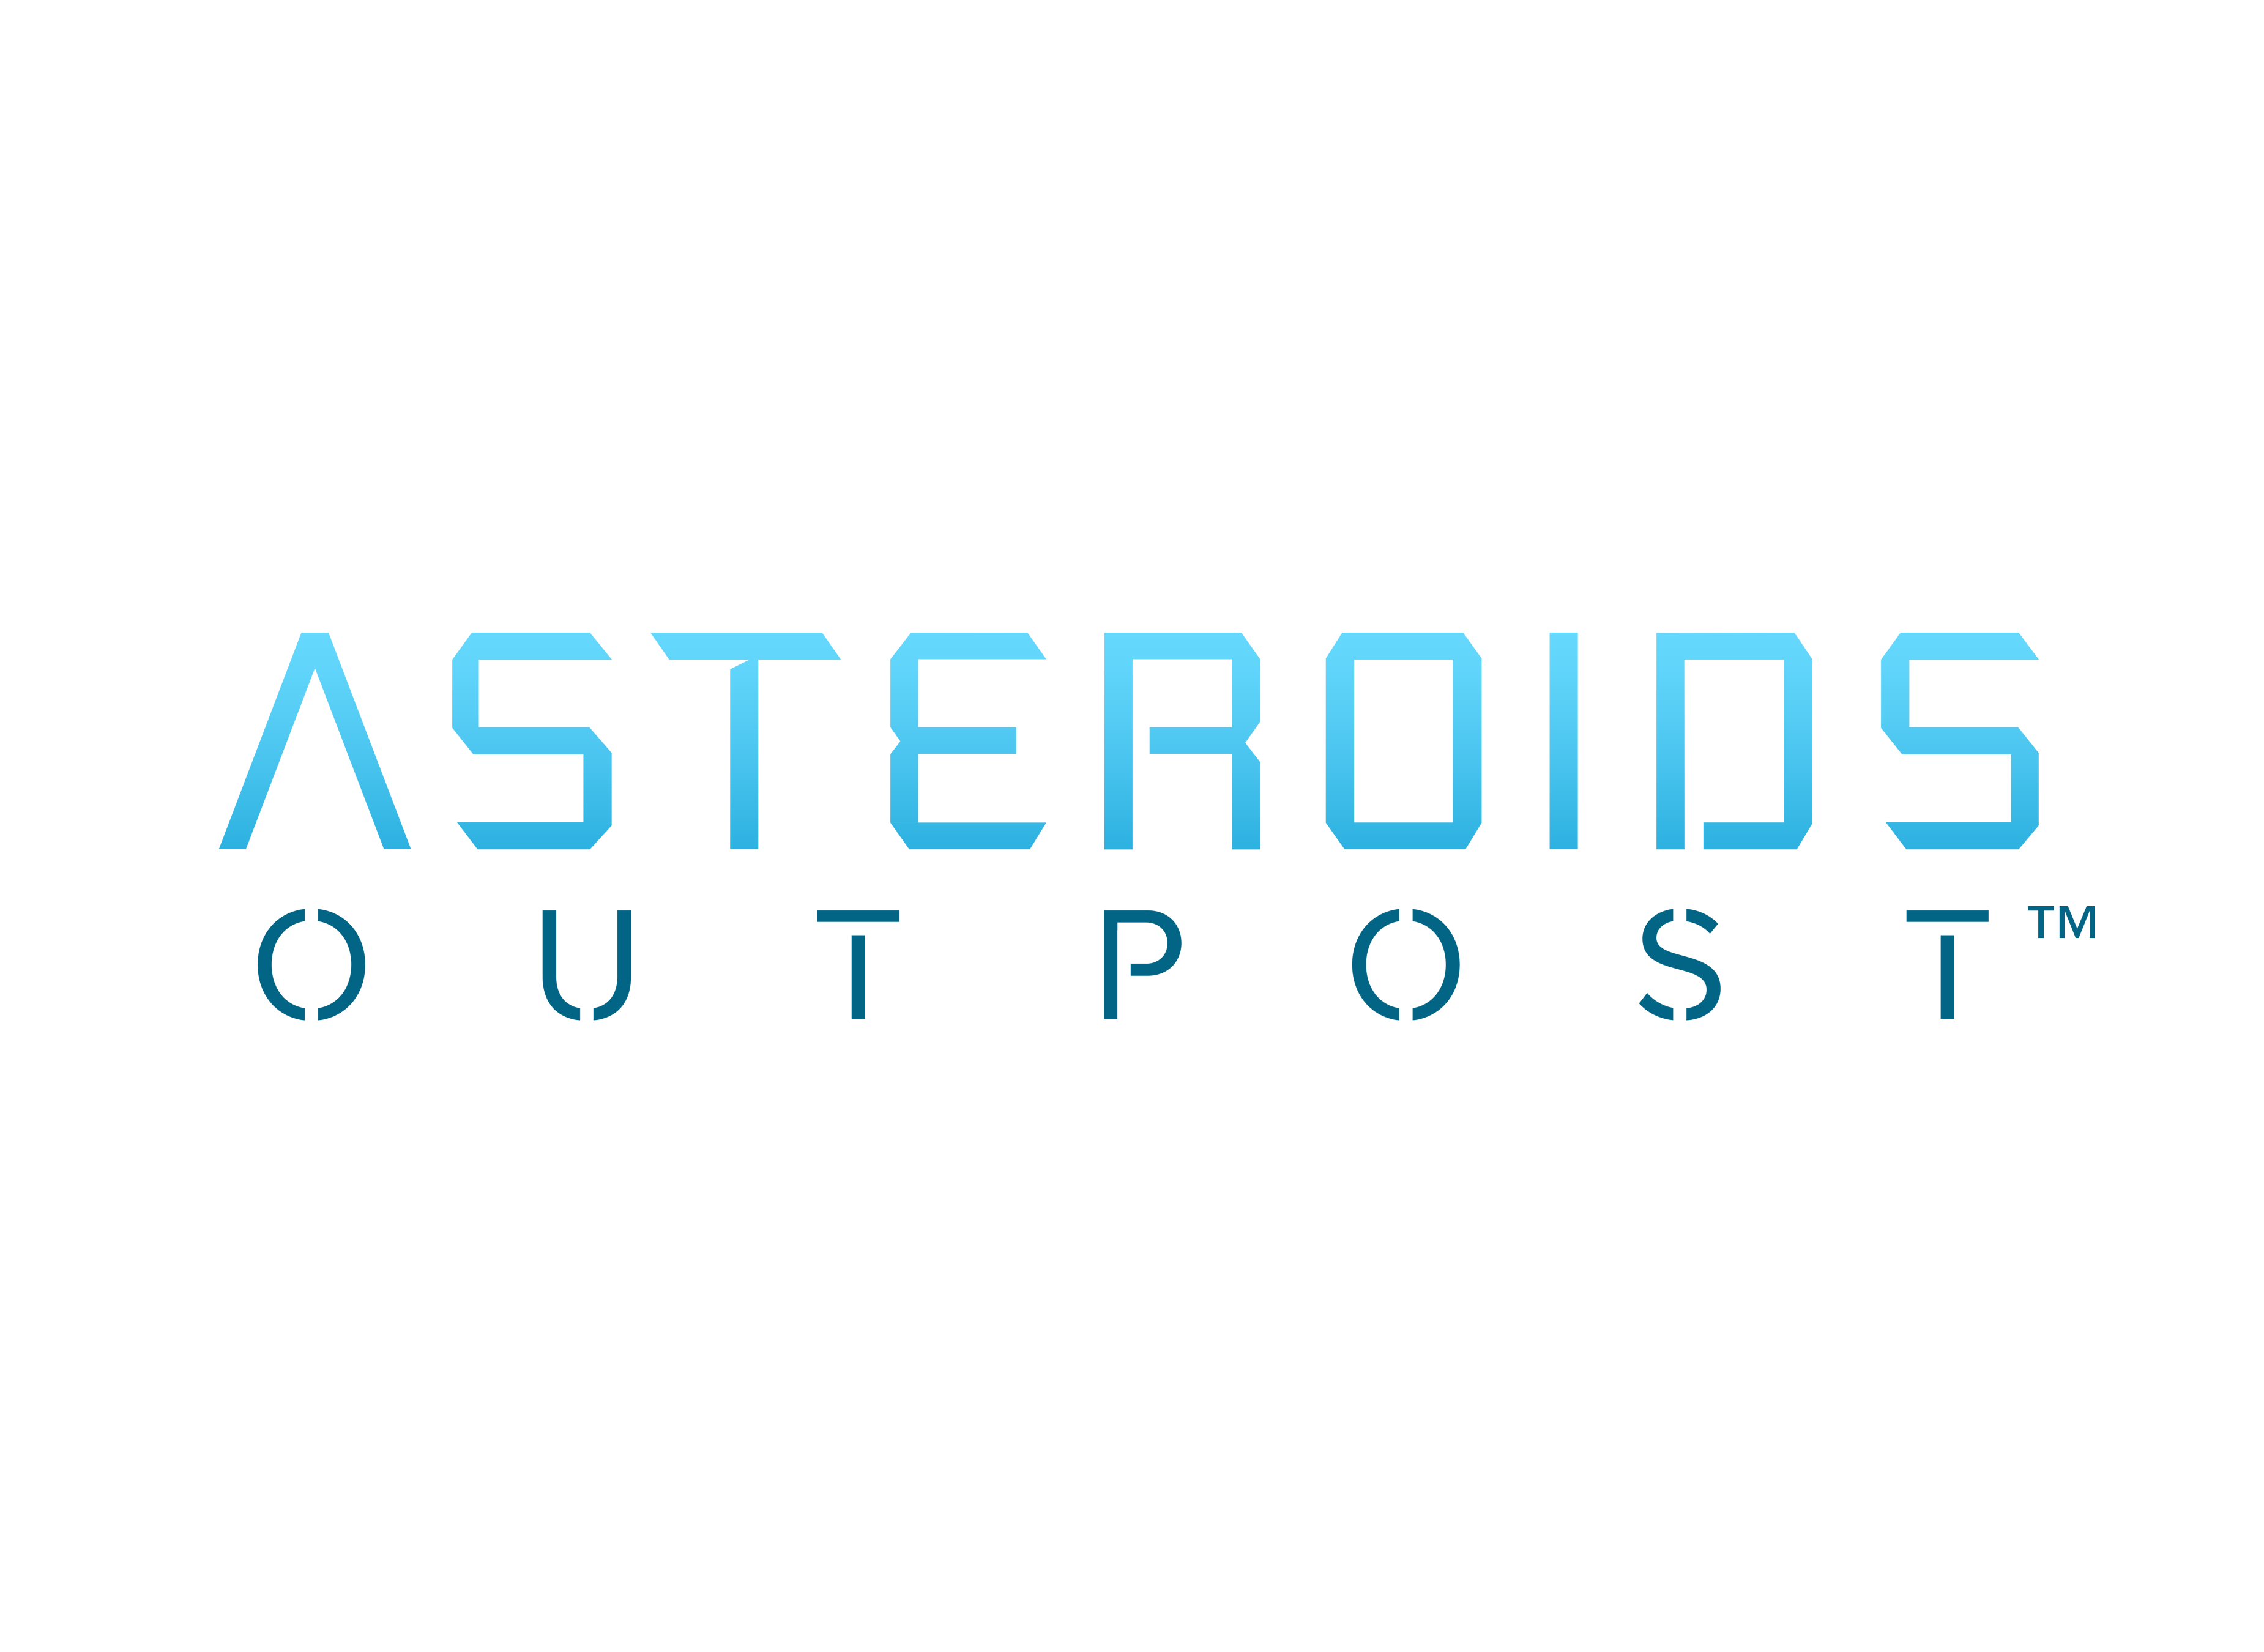 Asteroids Outpost Logo